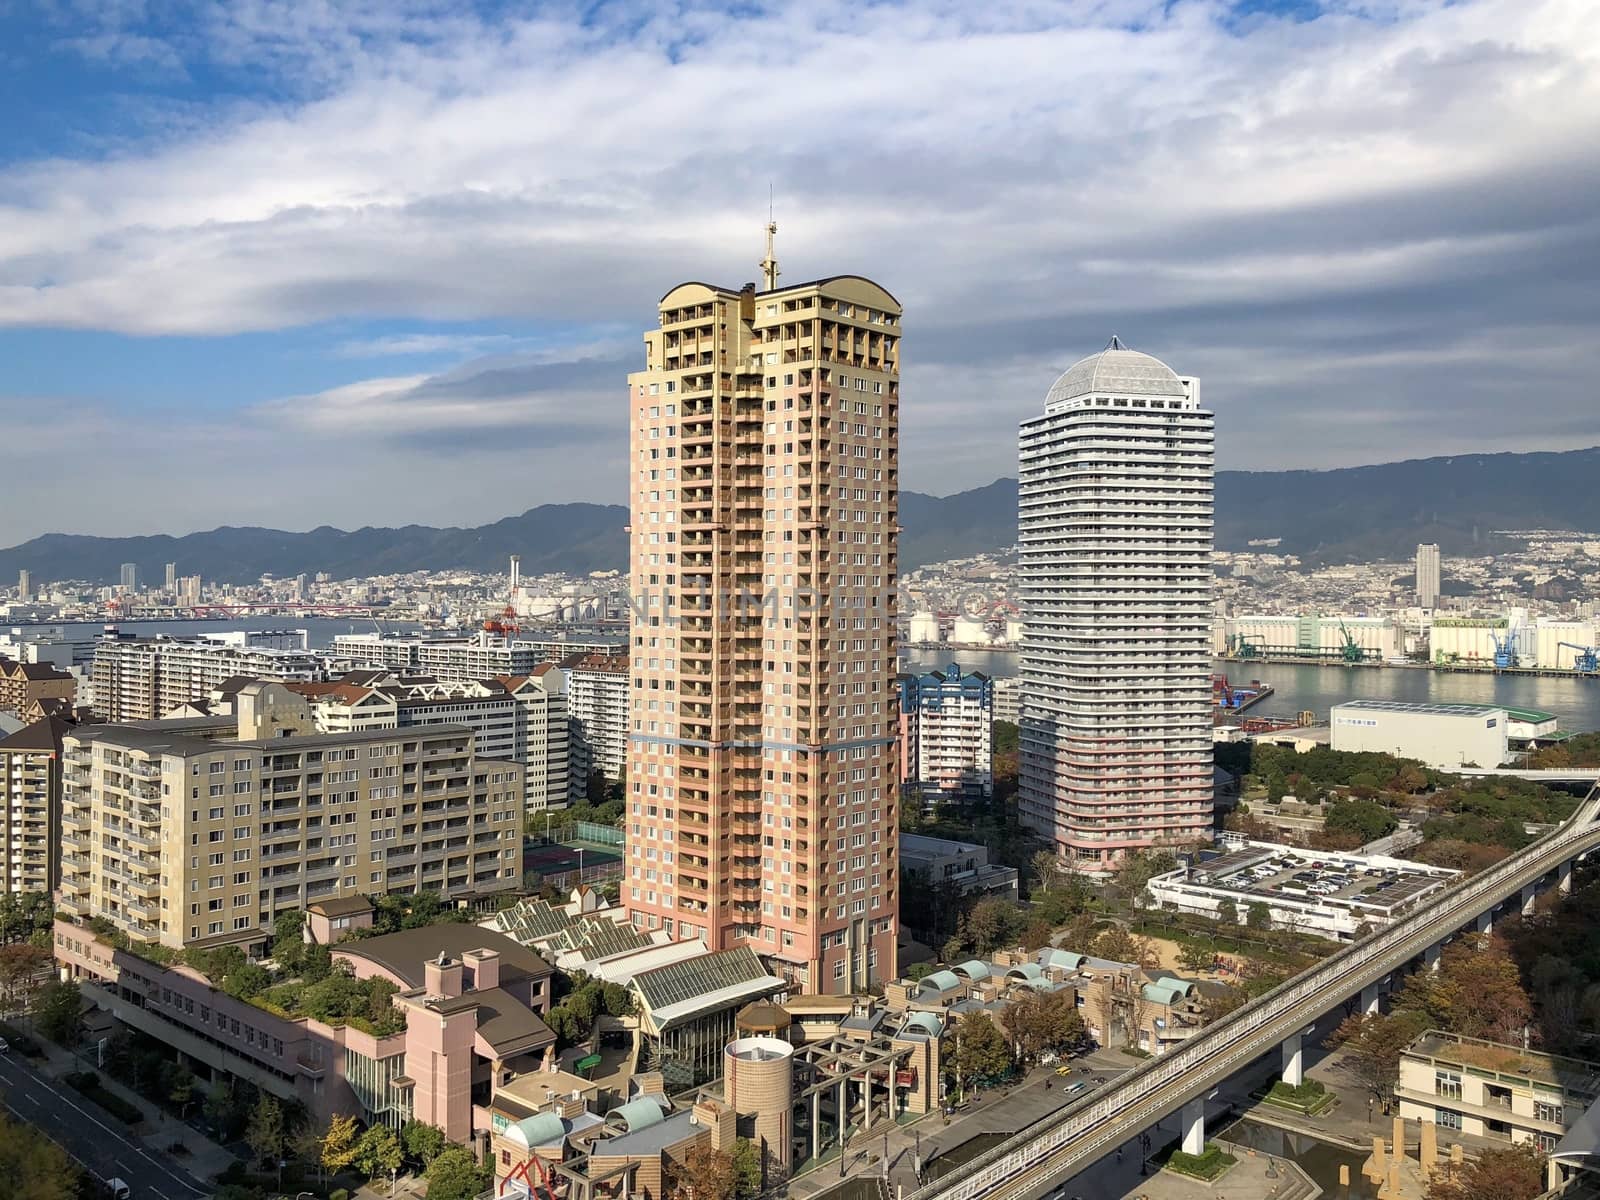 Aerial view of Kobe city from Rokko Island, Japan.